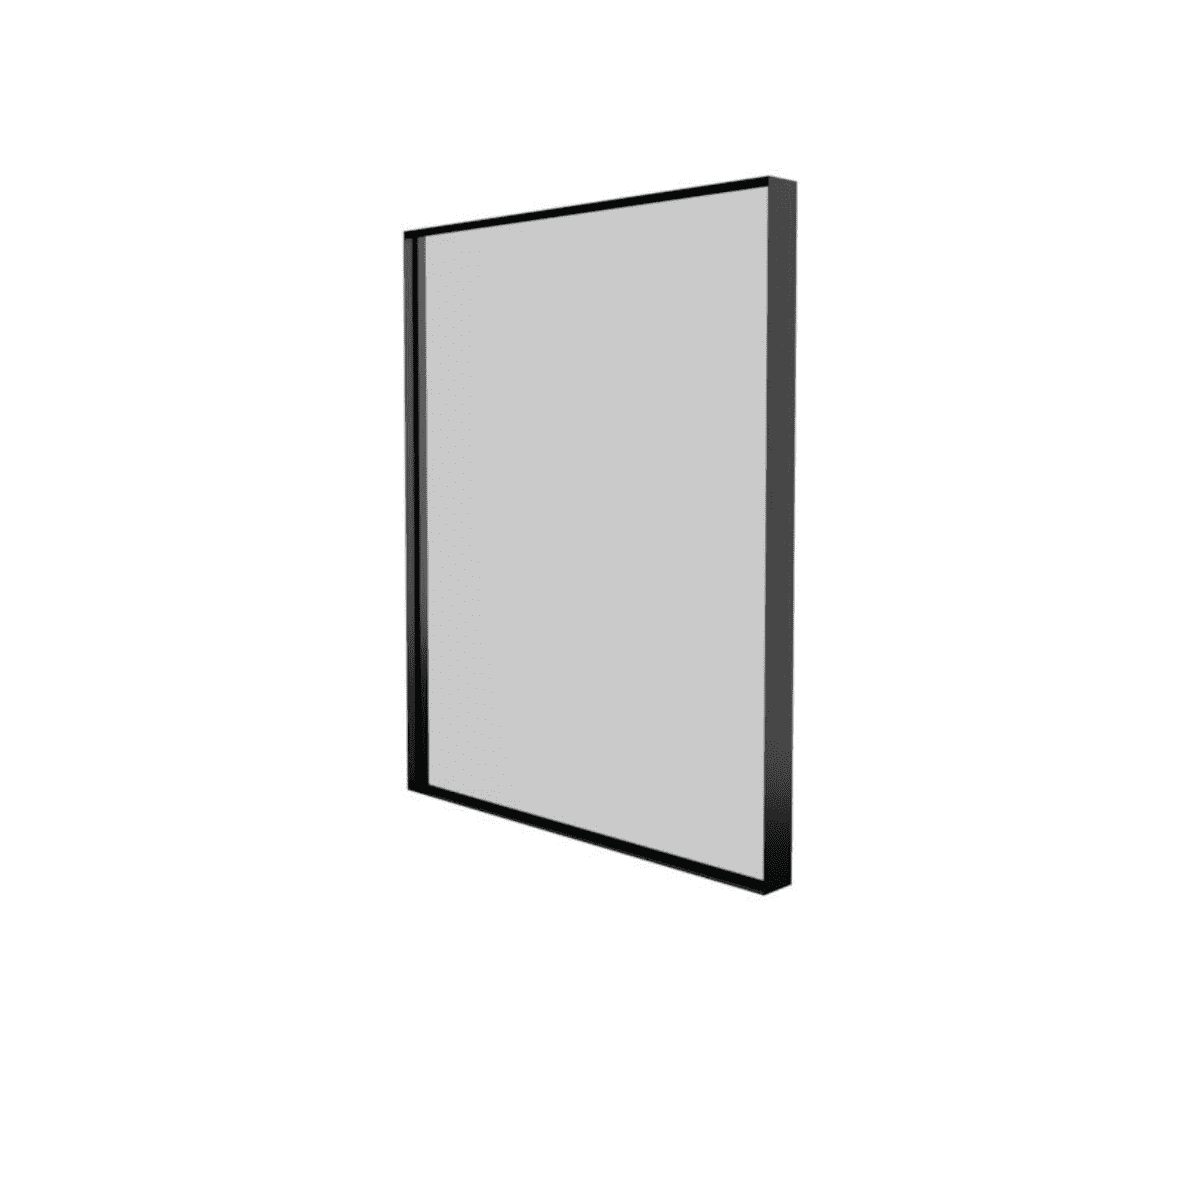 Sanibell Basicline spejl - 50x60cm - mat sort aluramme